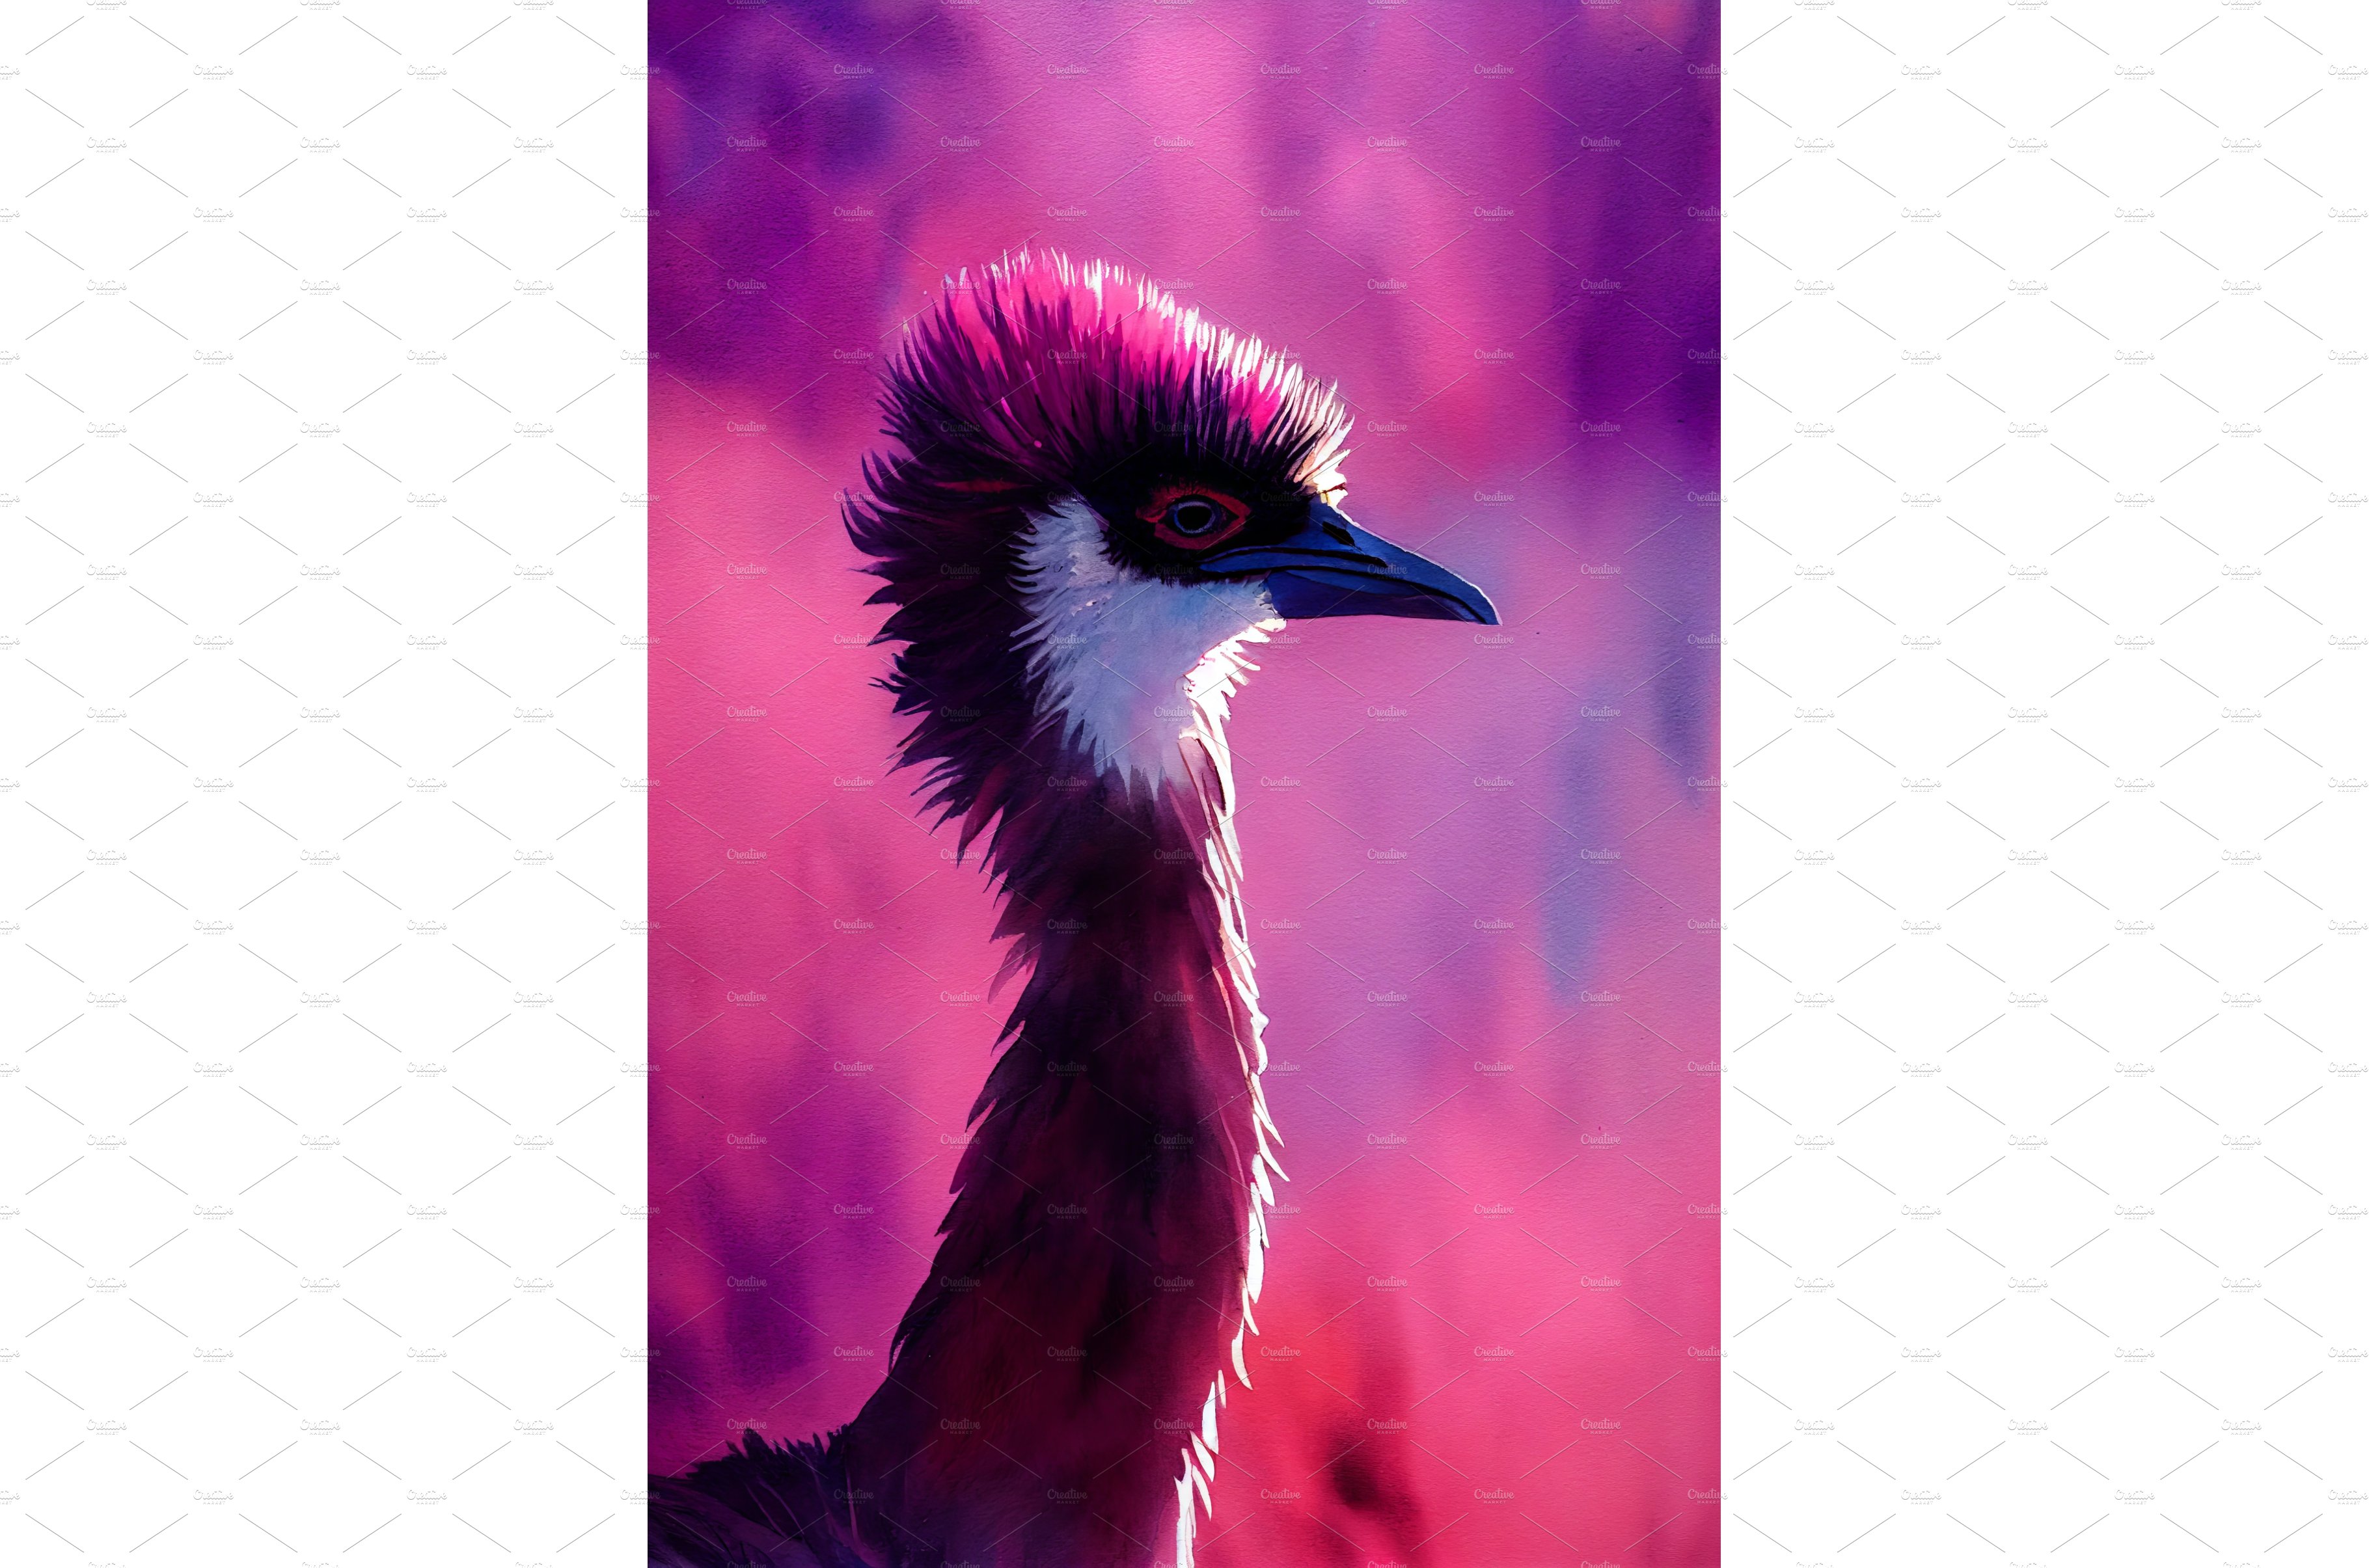 Watercolor portrait of cute emu cover image.